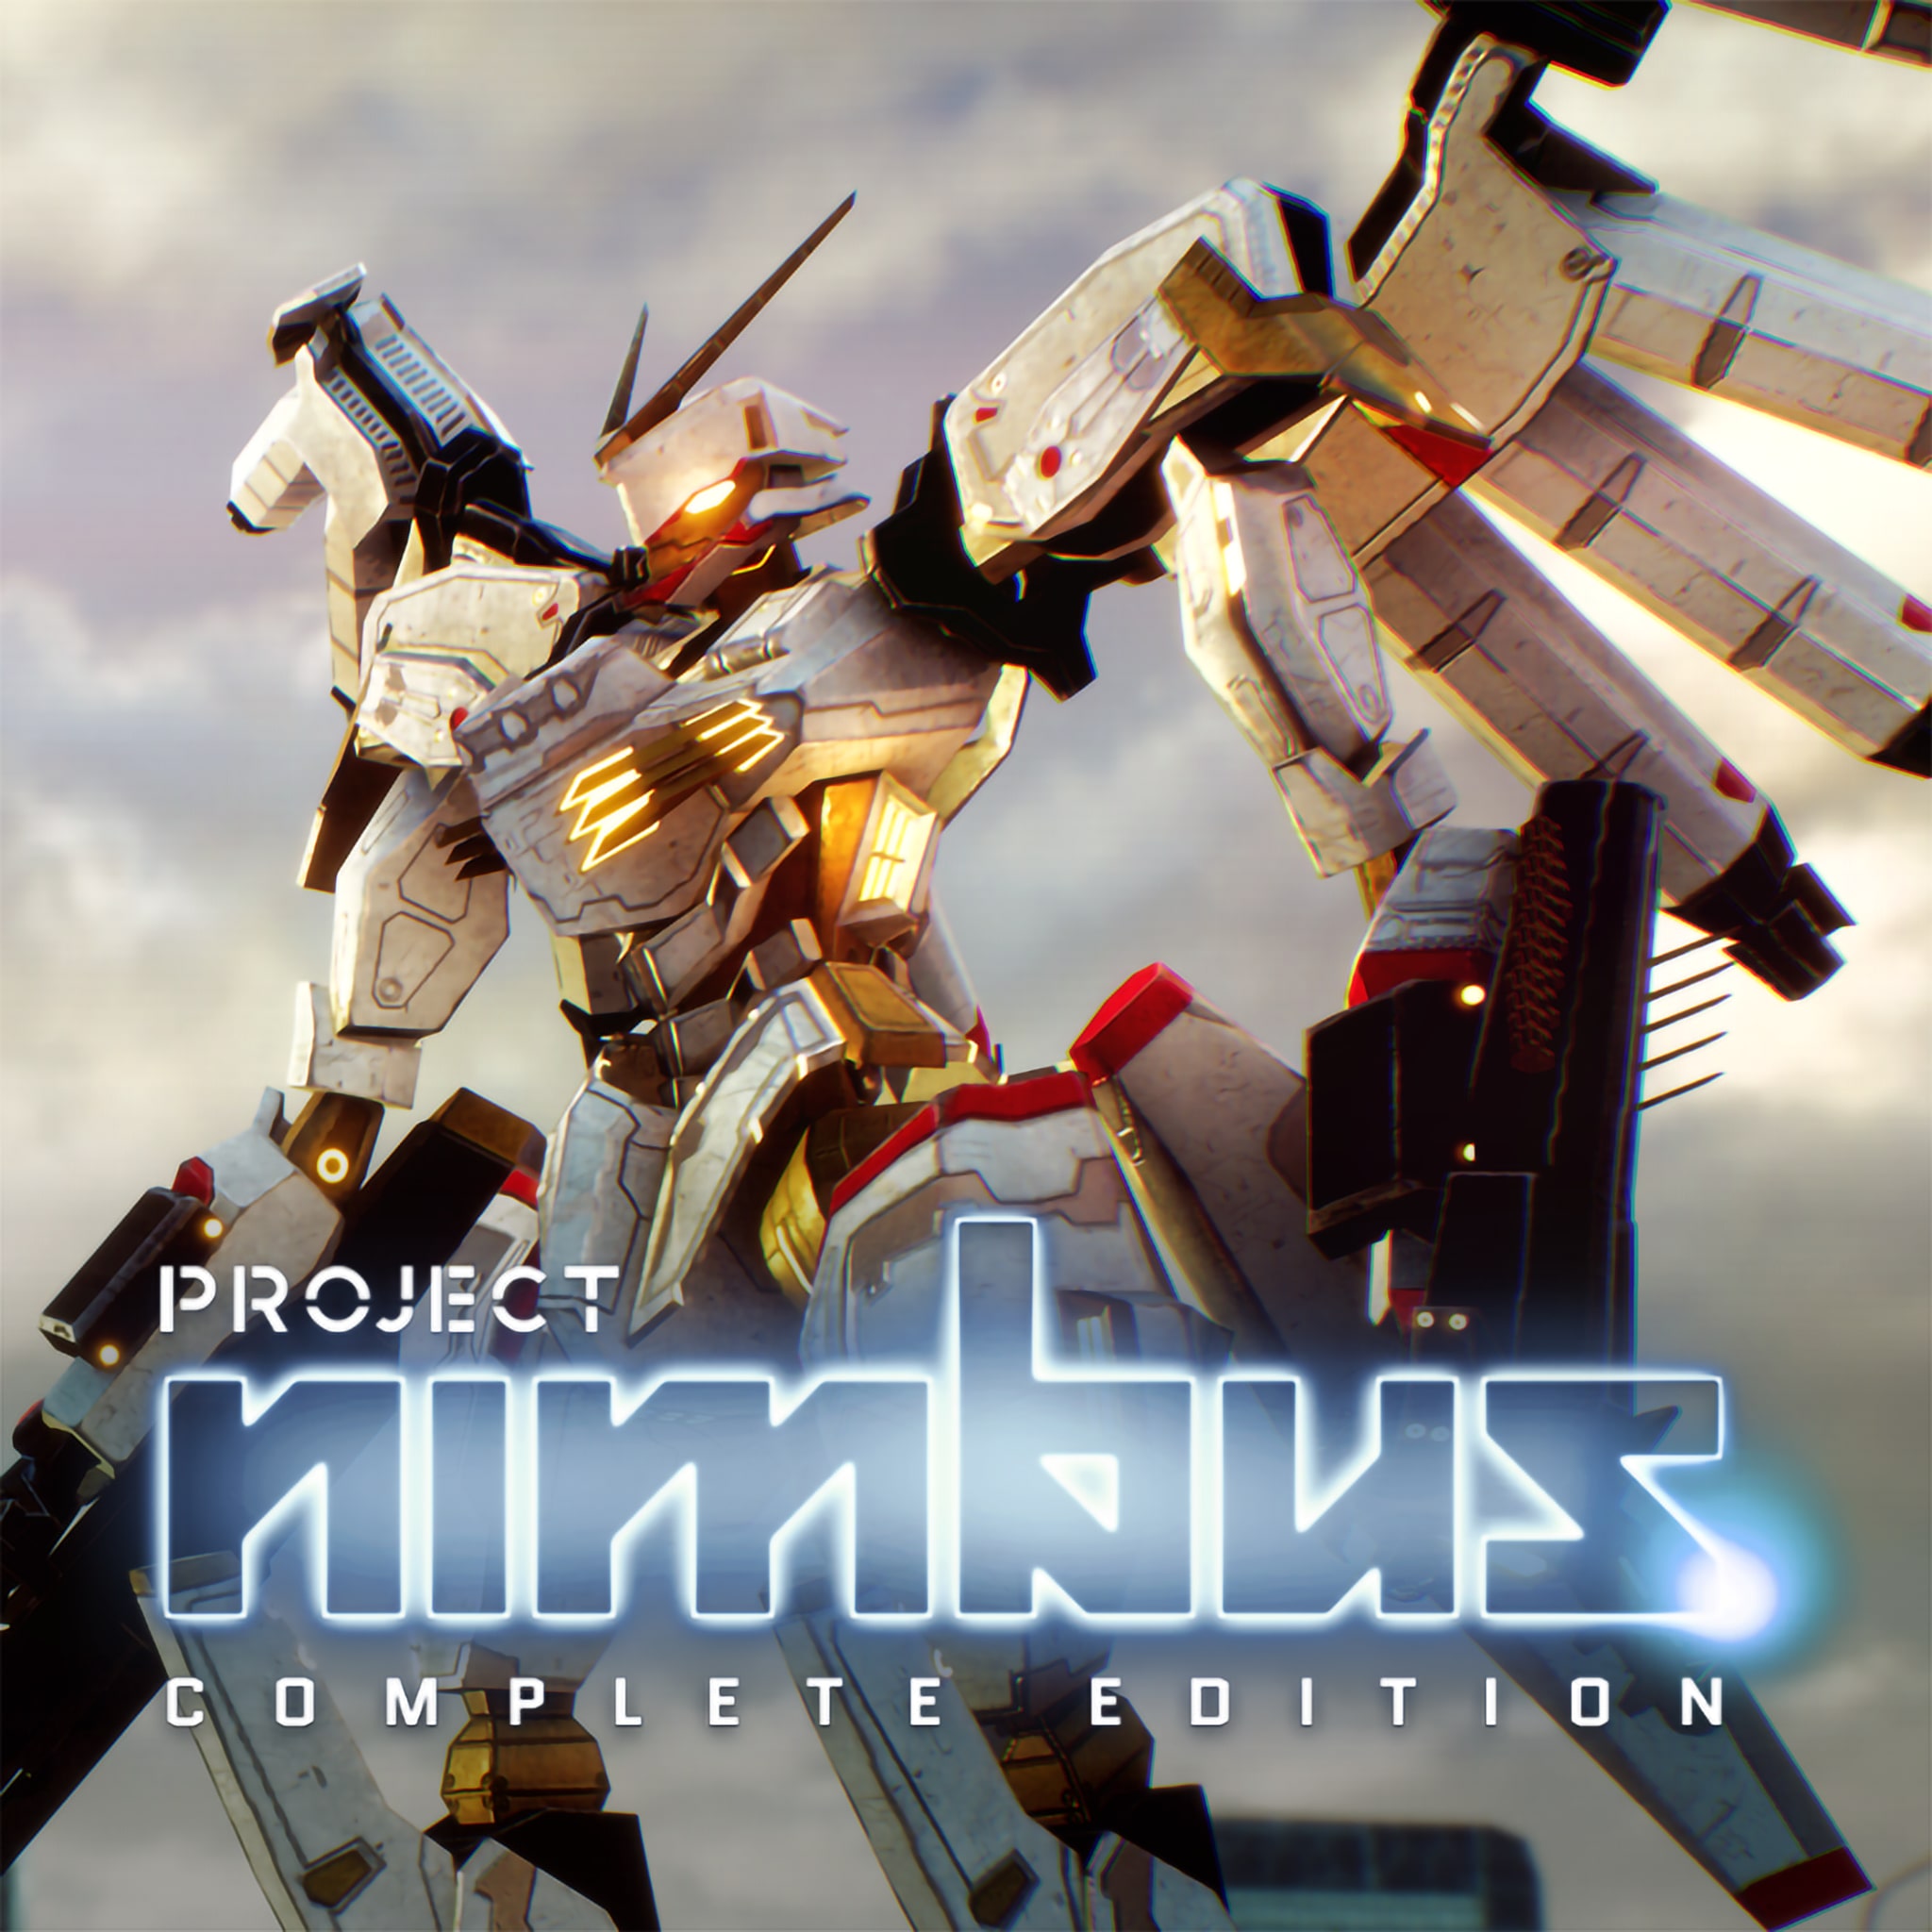 Project Nimbus: Complete Edition